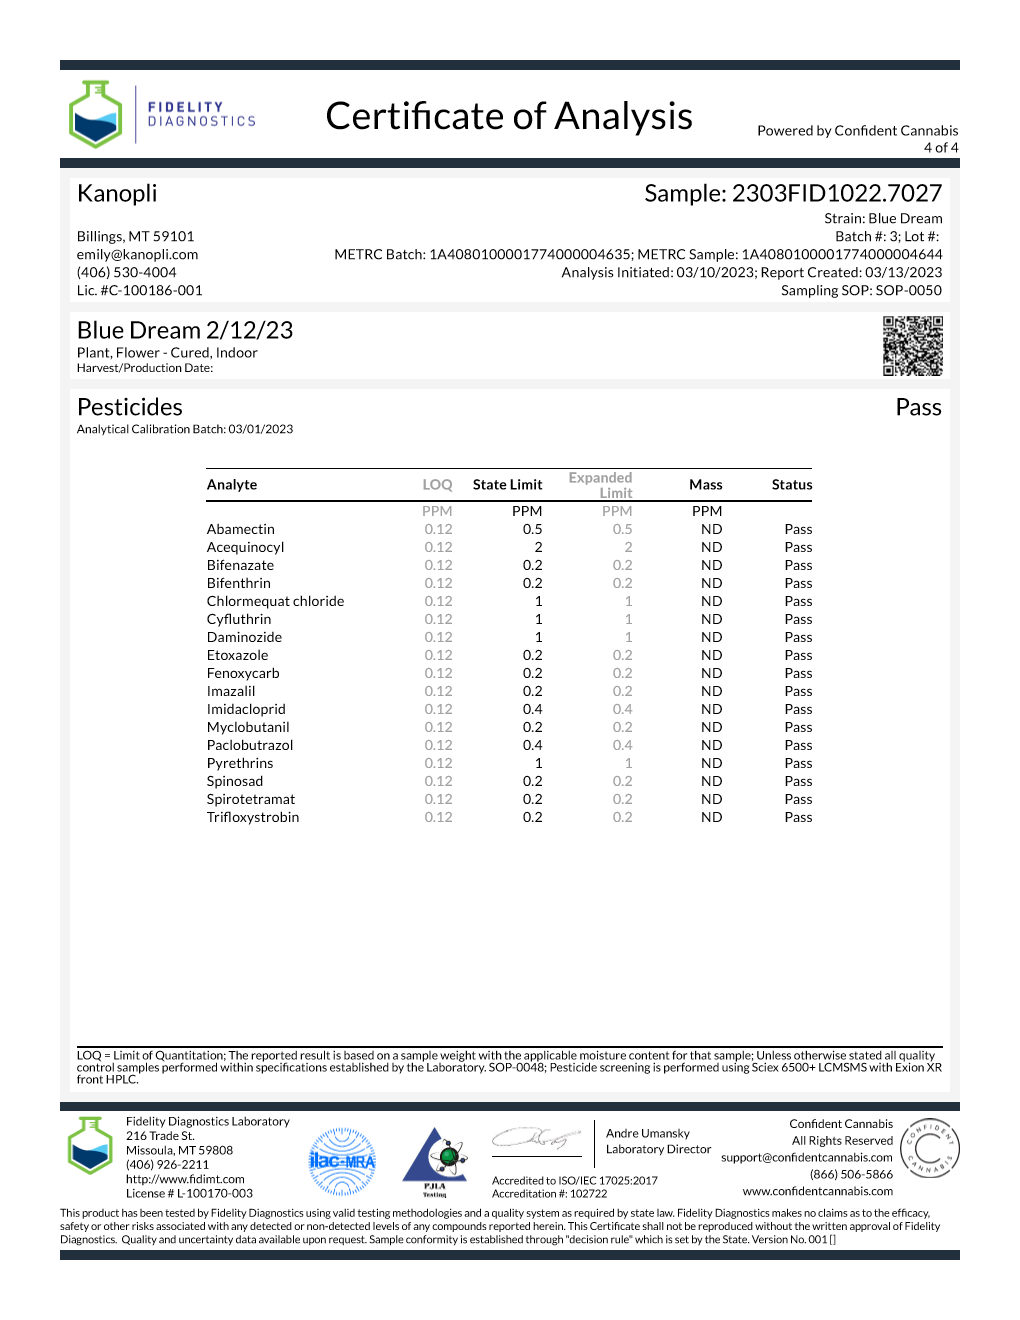 Blue Dream - Hybrid 19.67% THC (Feb. 2023) MEDICAL